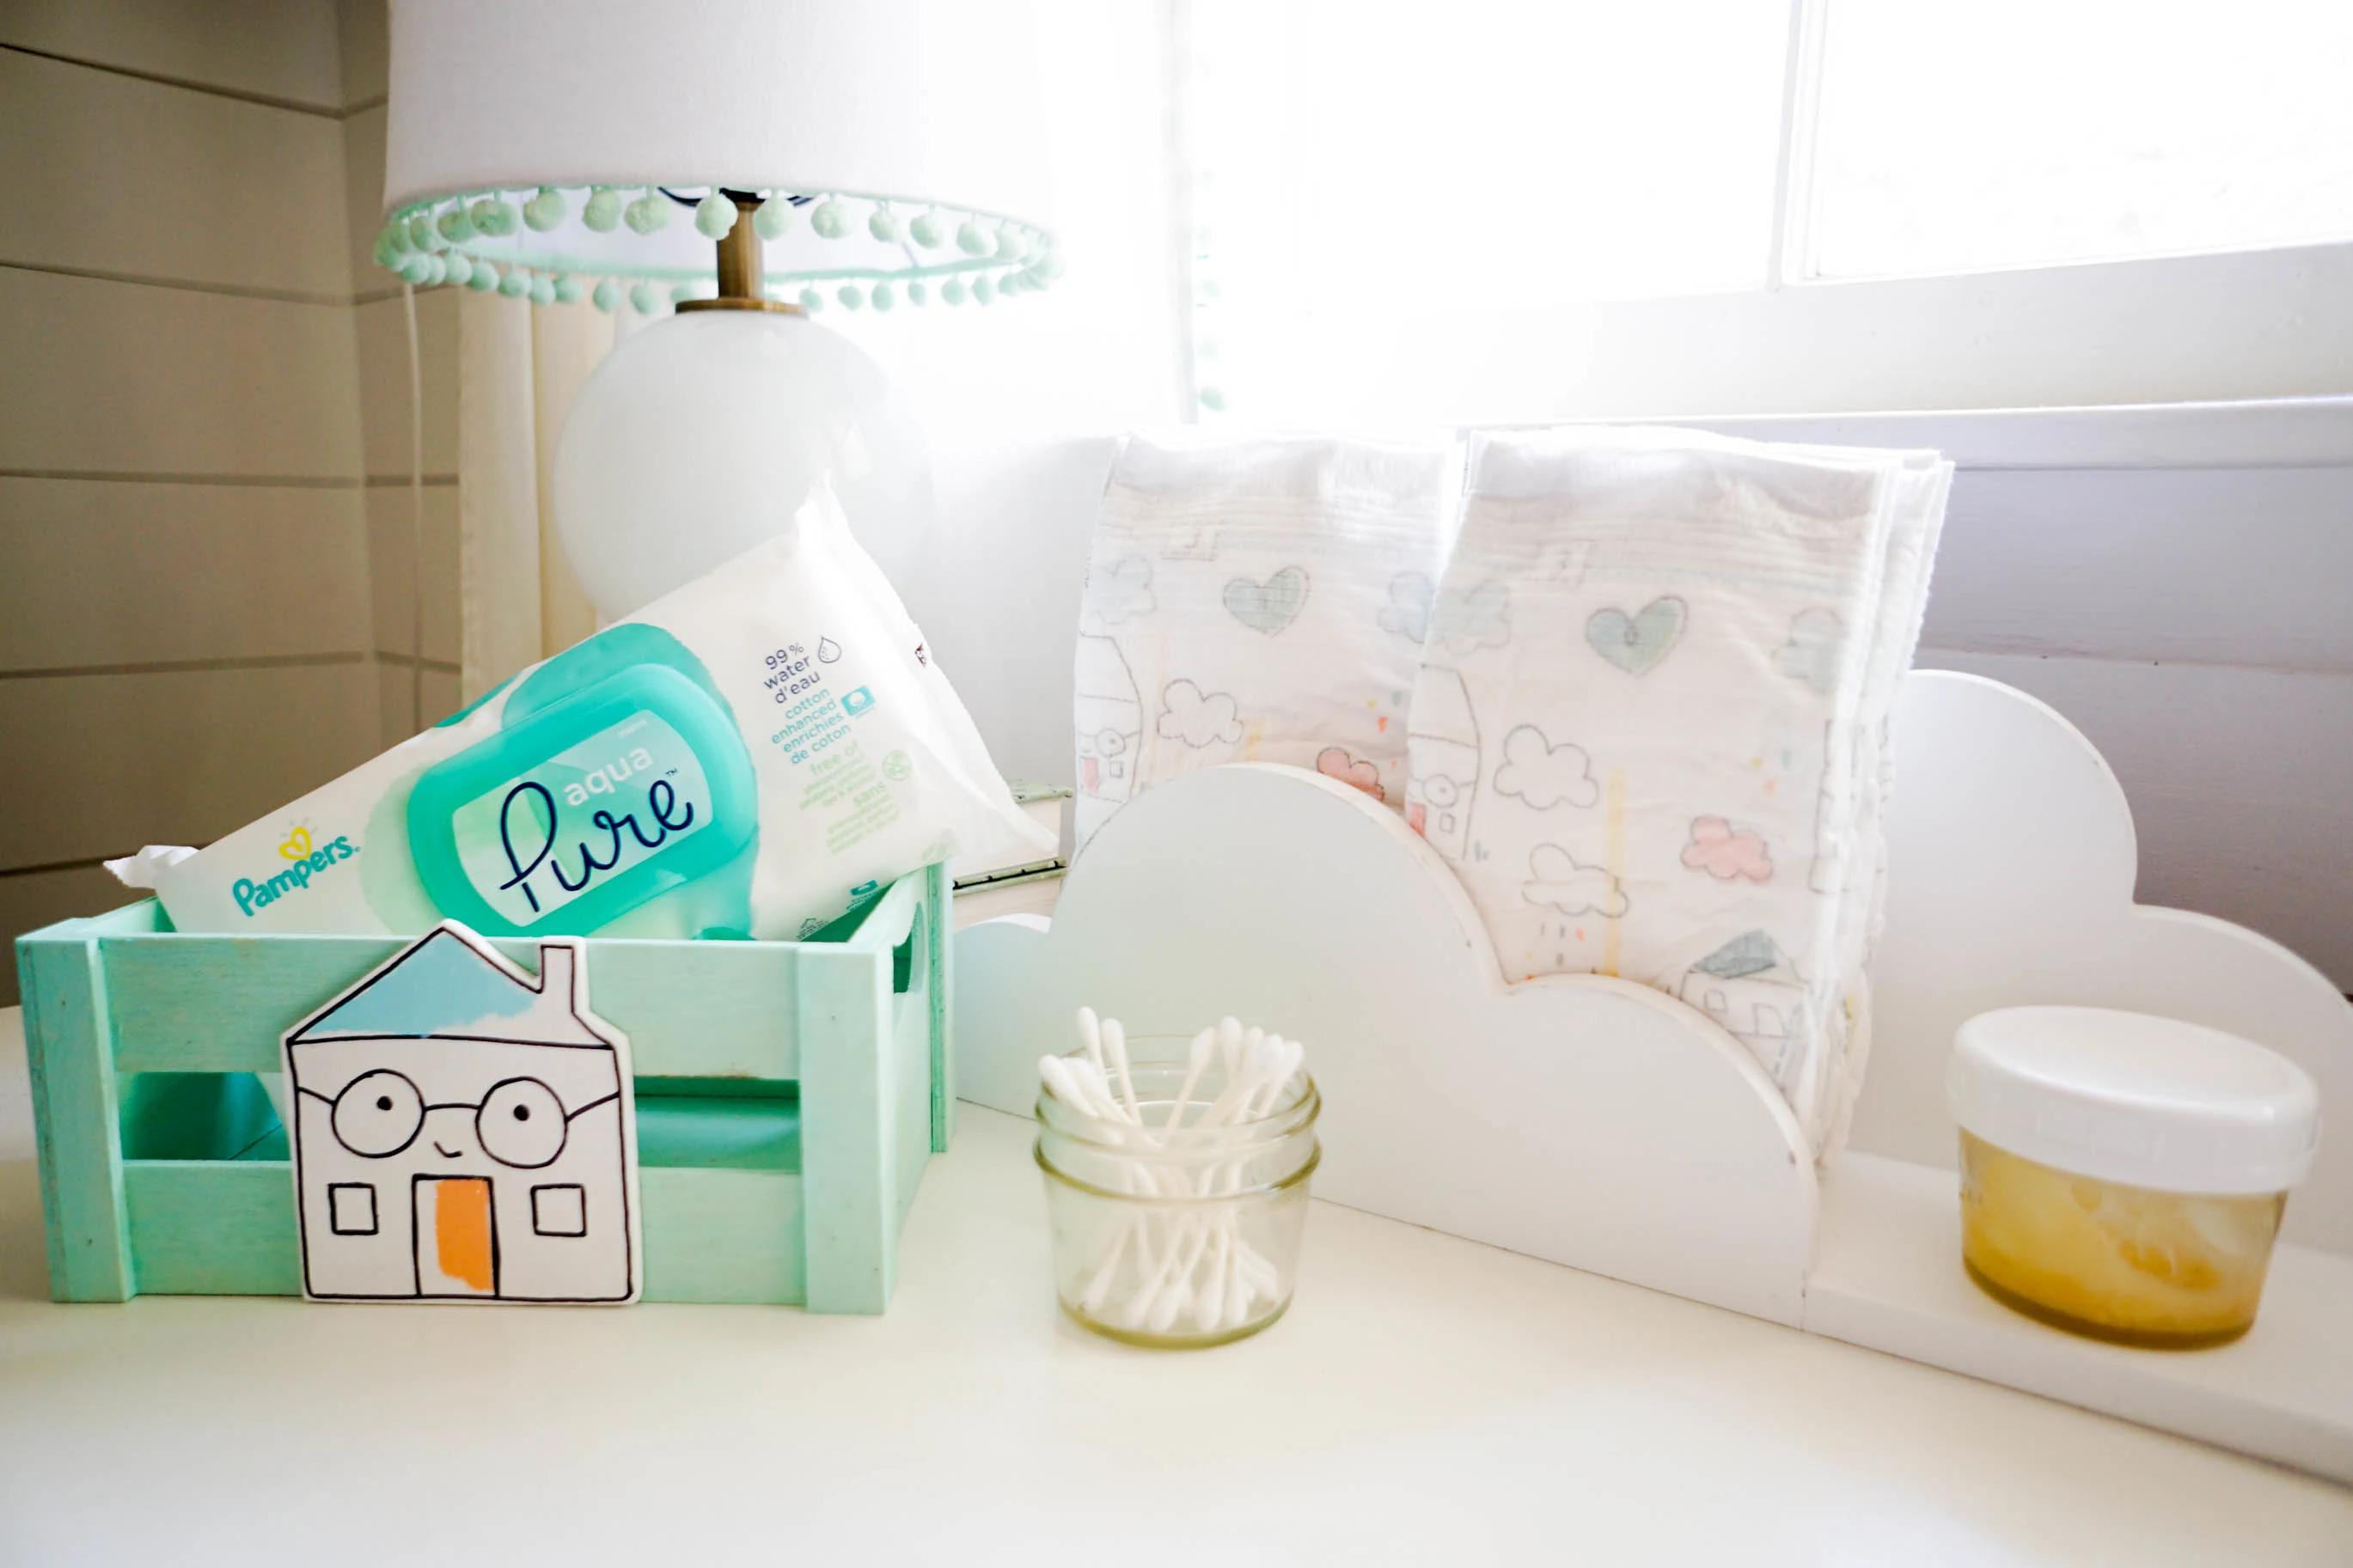 DIY Diaper Organization Ideas + Pampers Pure